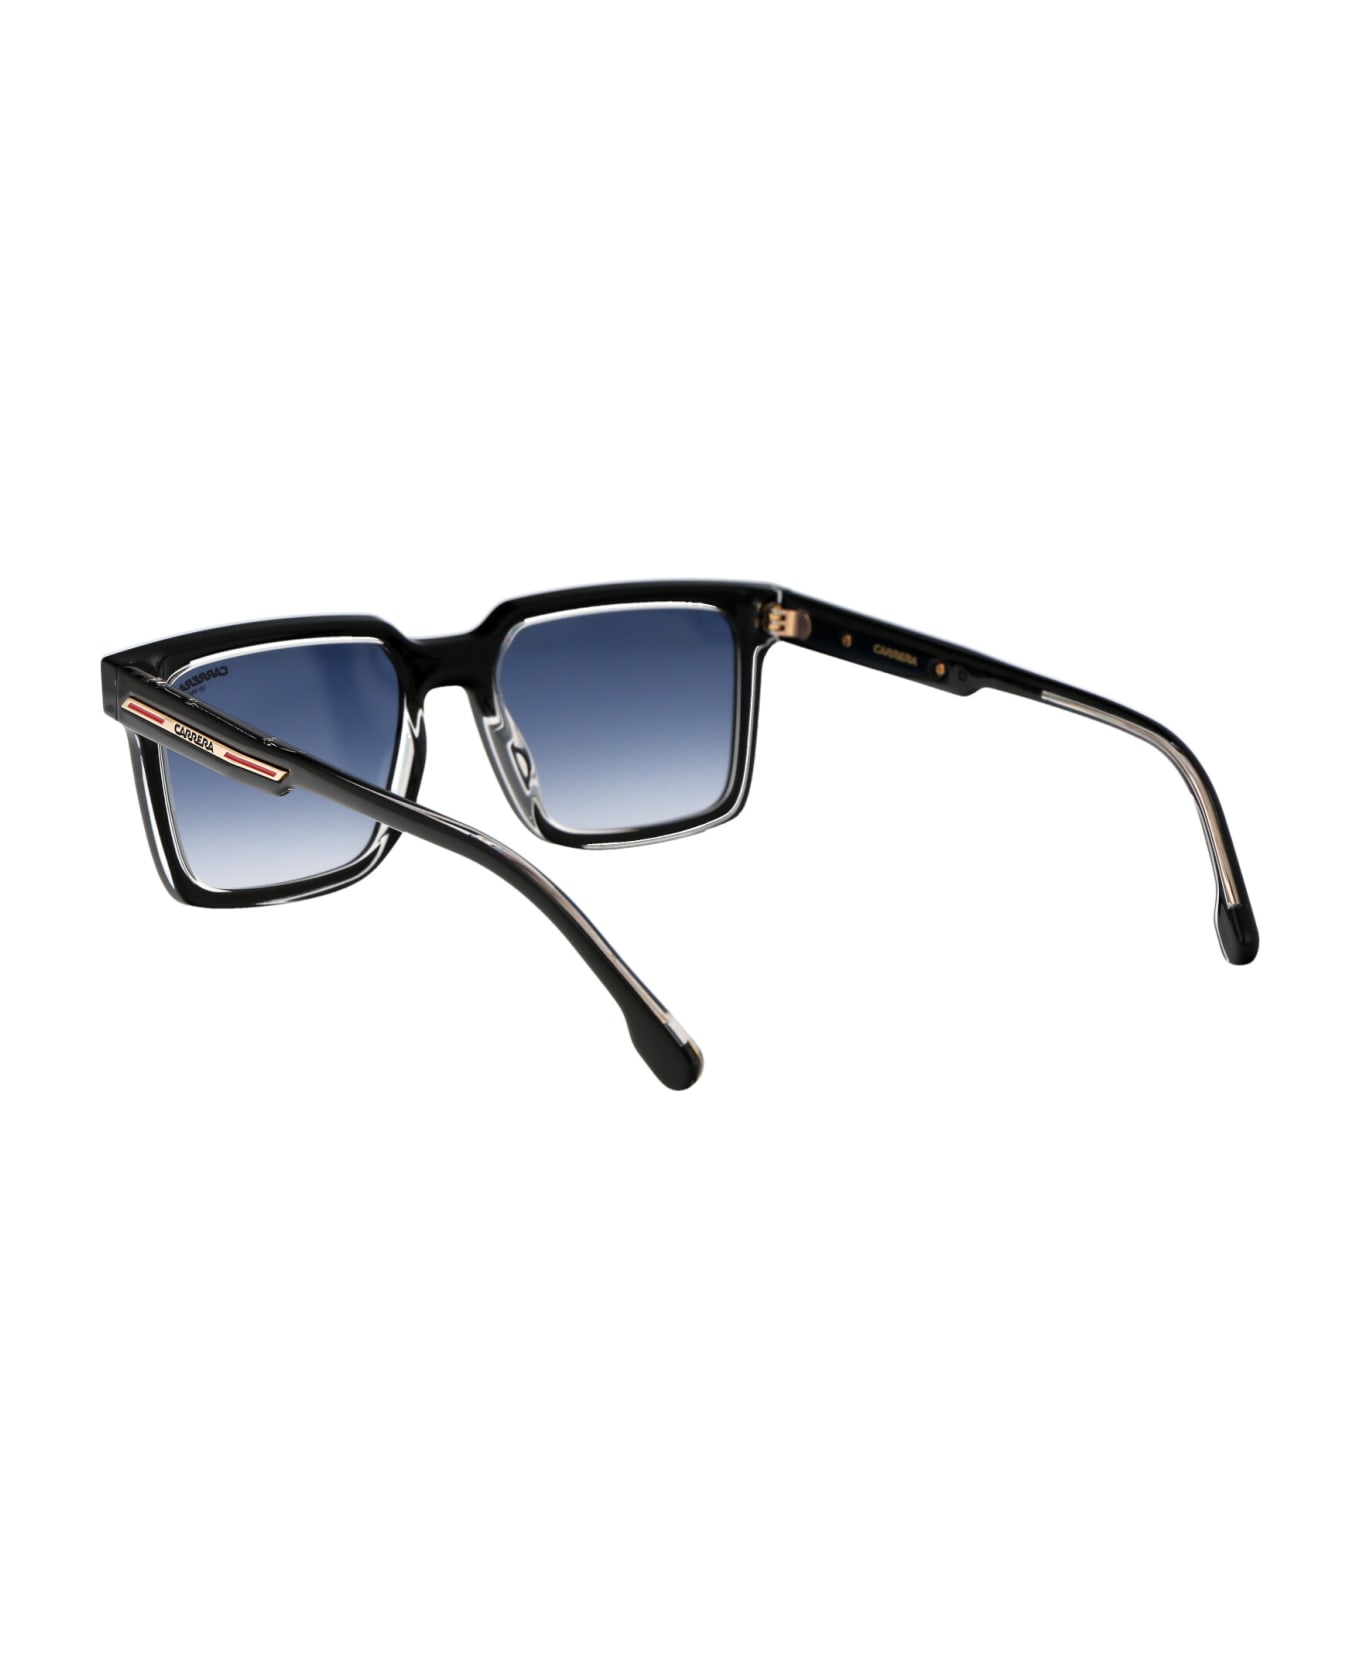 Carrera Victory C 02/s Sunglasses - 7C508 BLACK CRY